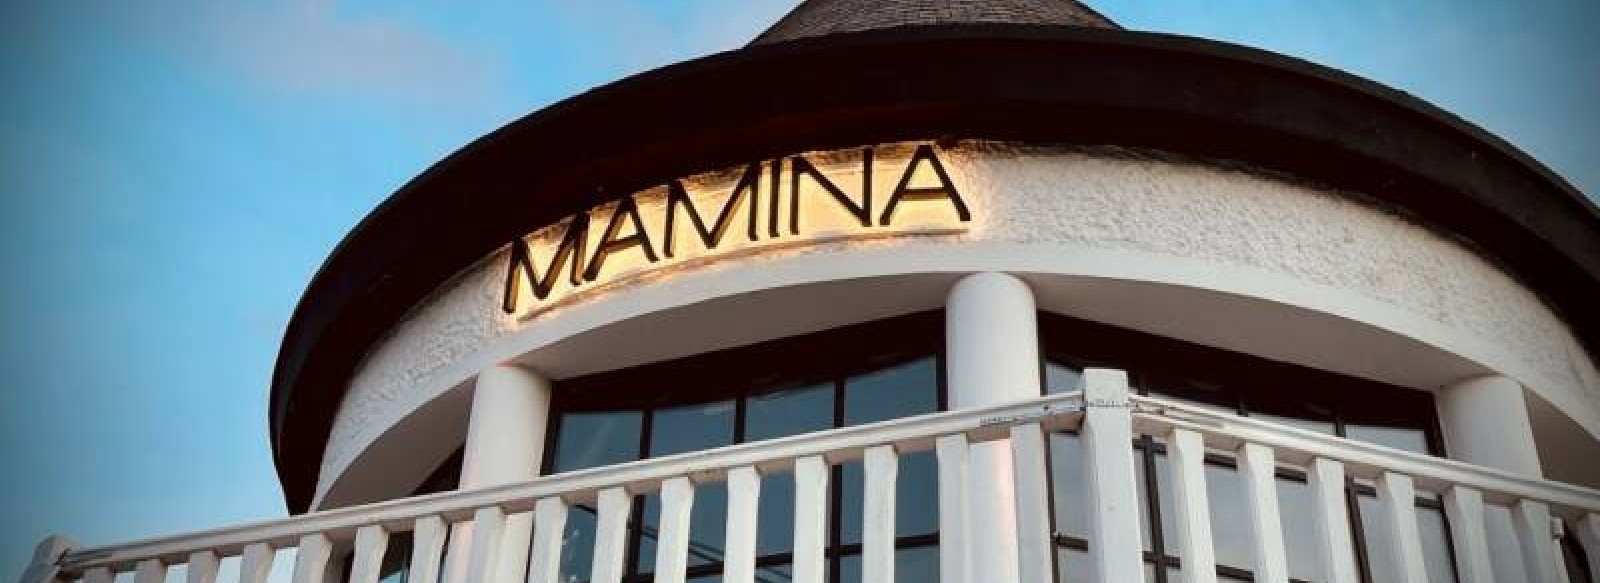 Restaurant - Mamina